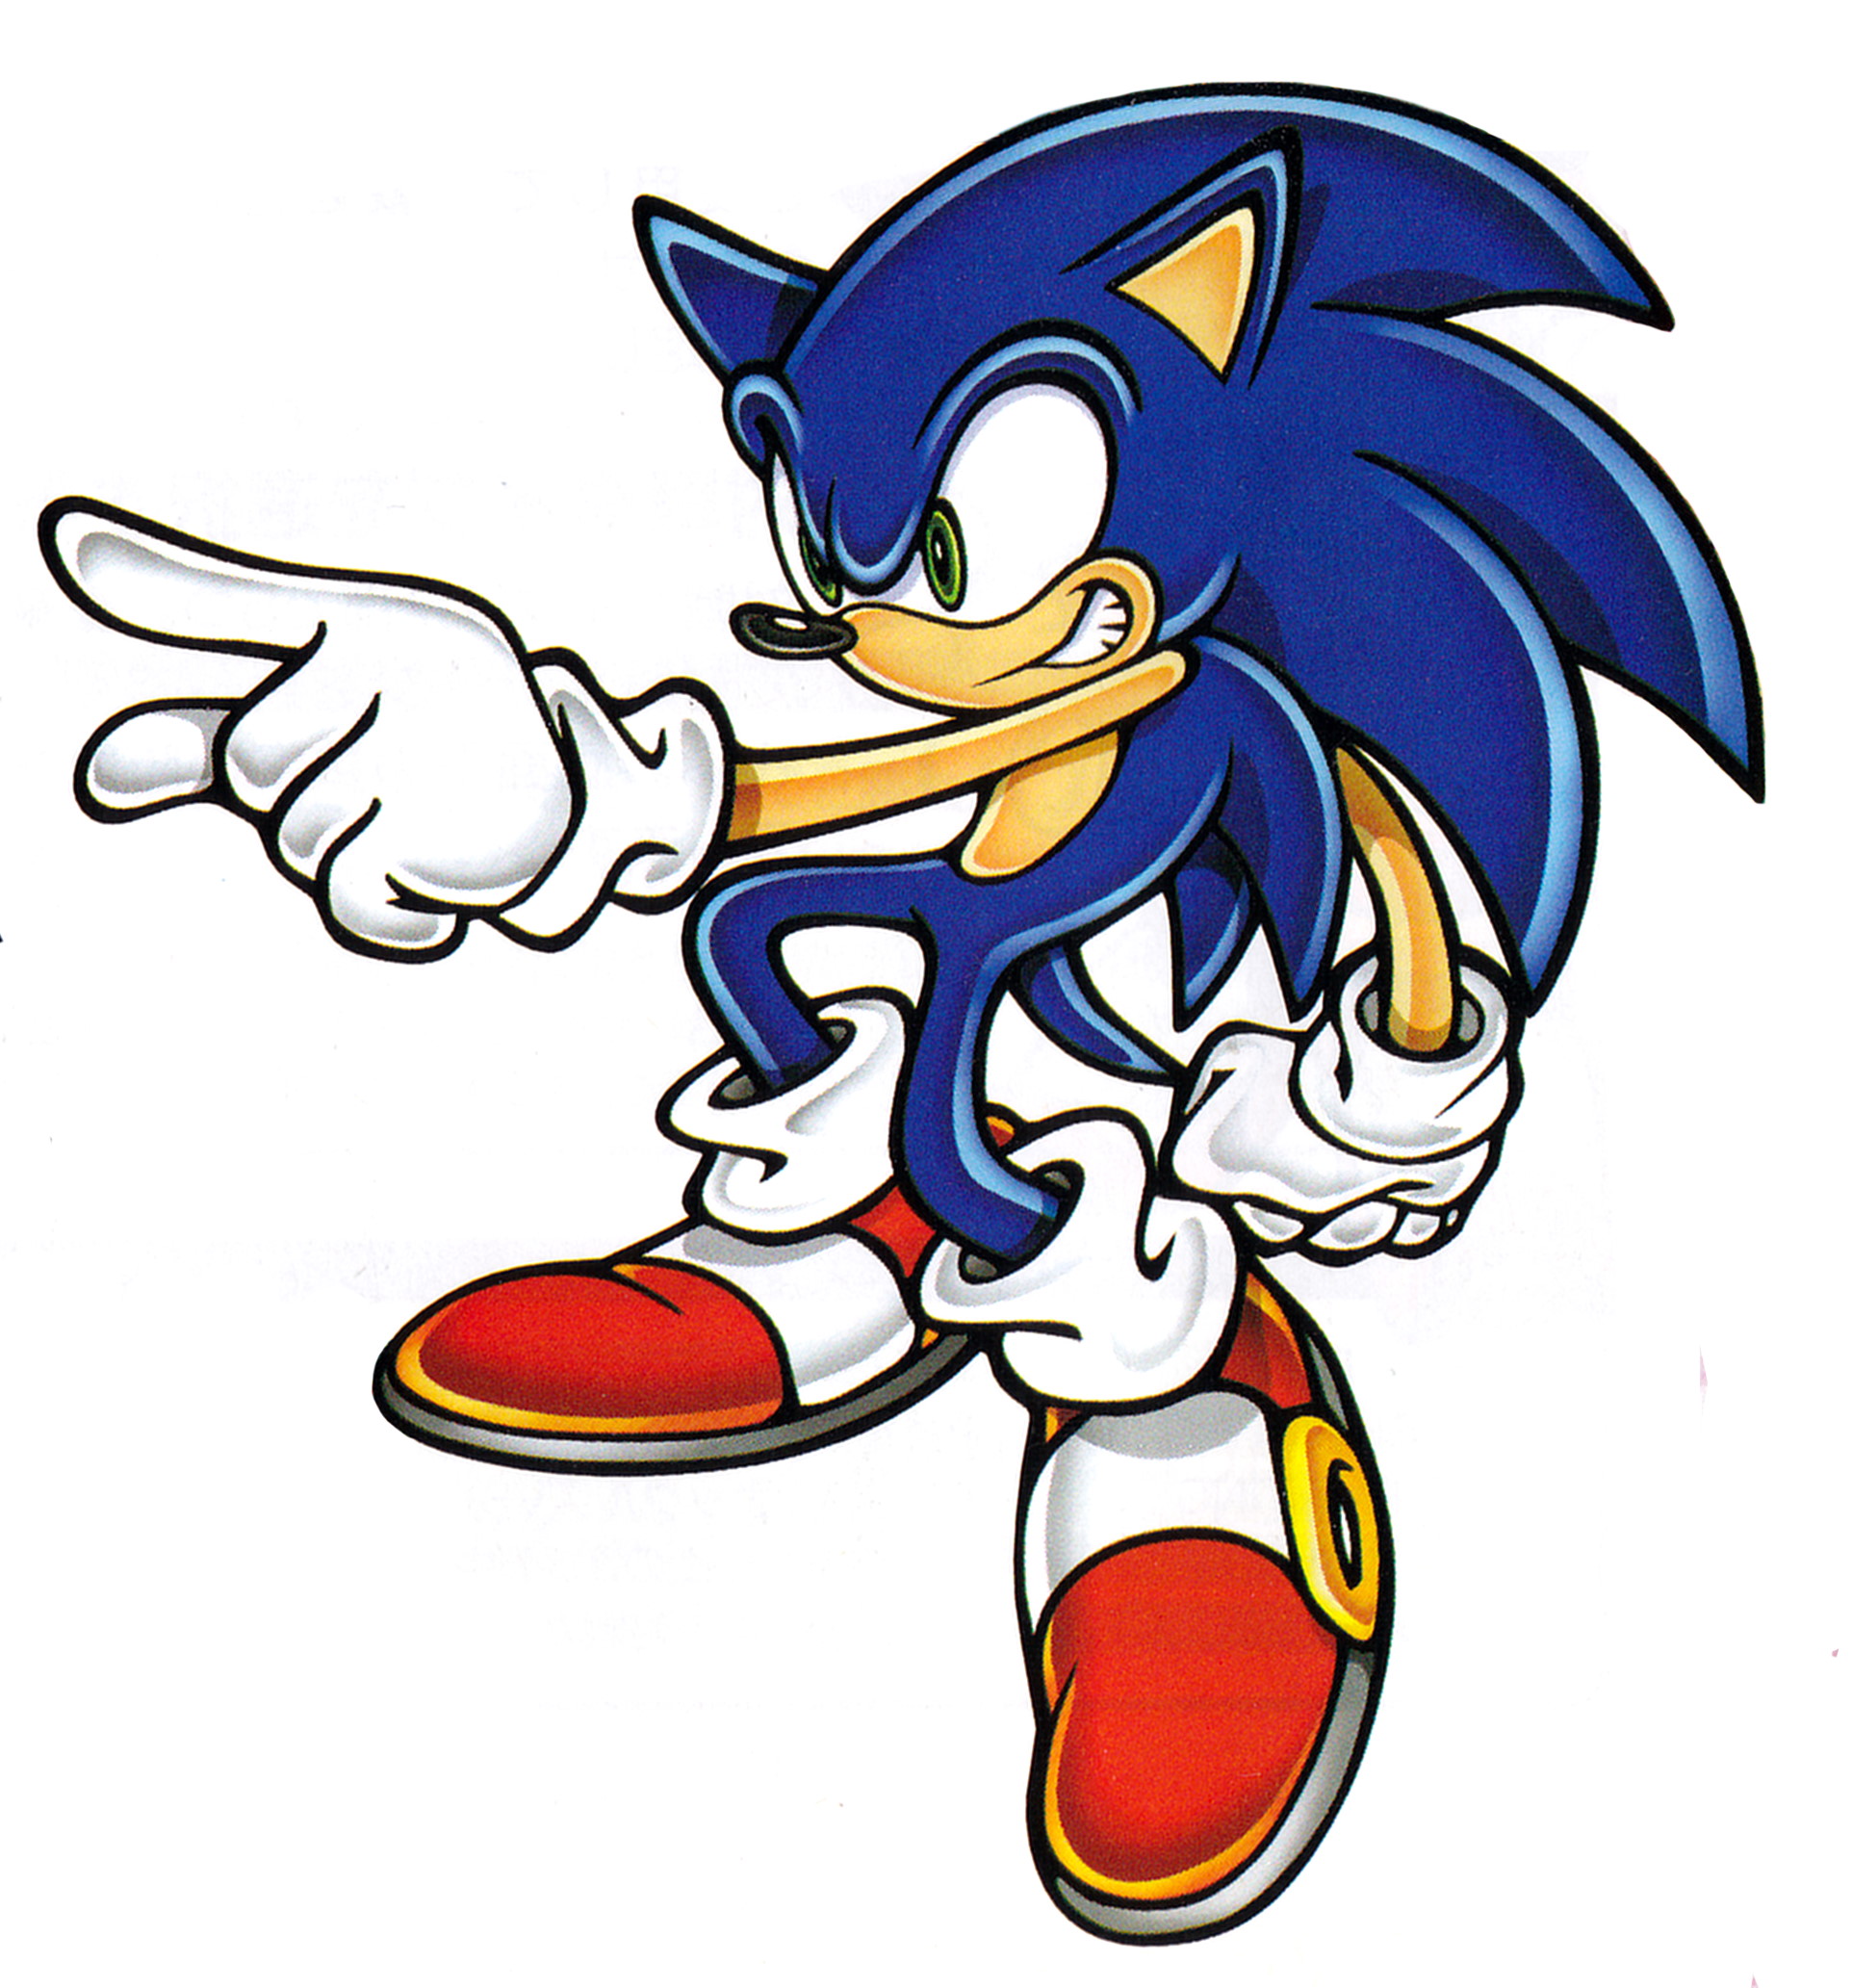 Sonic pov